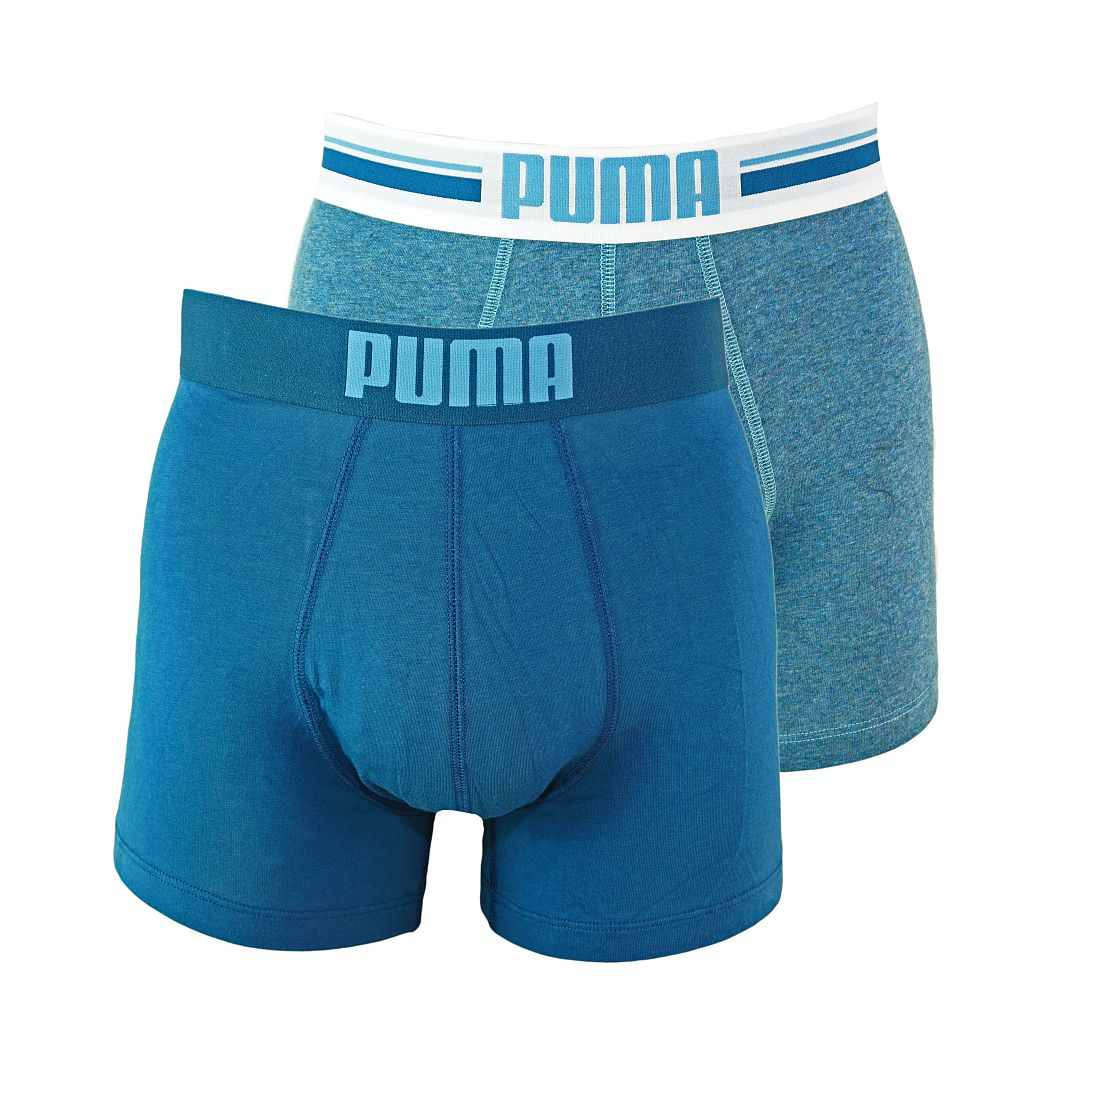 PUMA Shorts Unterhosen 2er Pack Boxer 651003001 162 020 denim SF17-PMS1